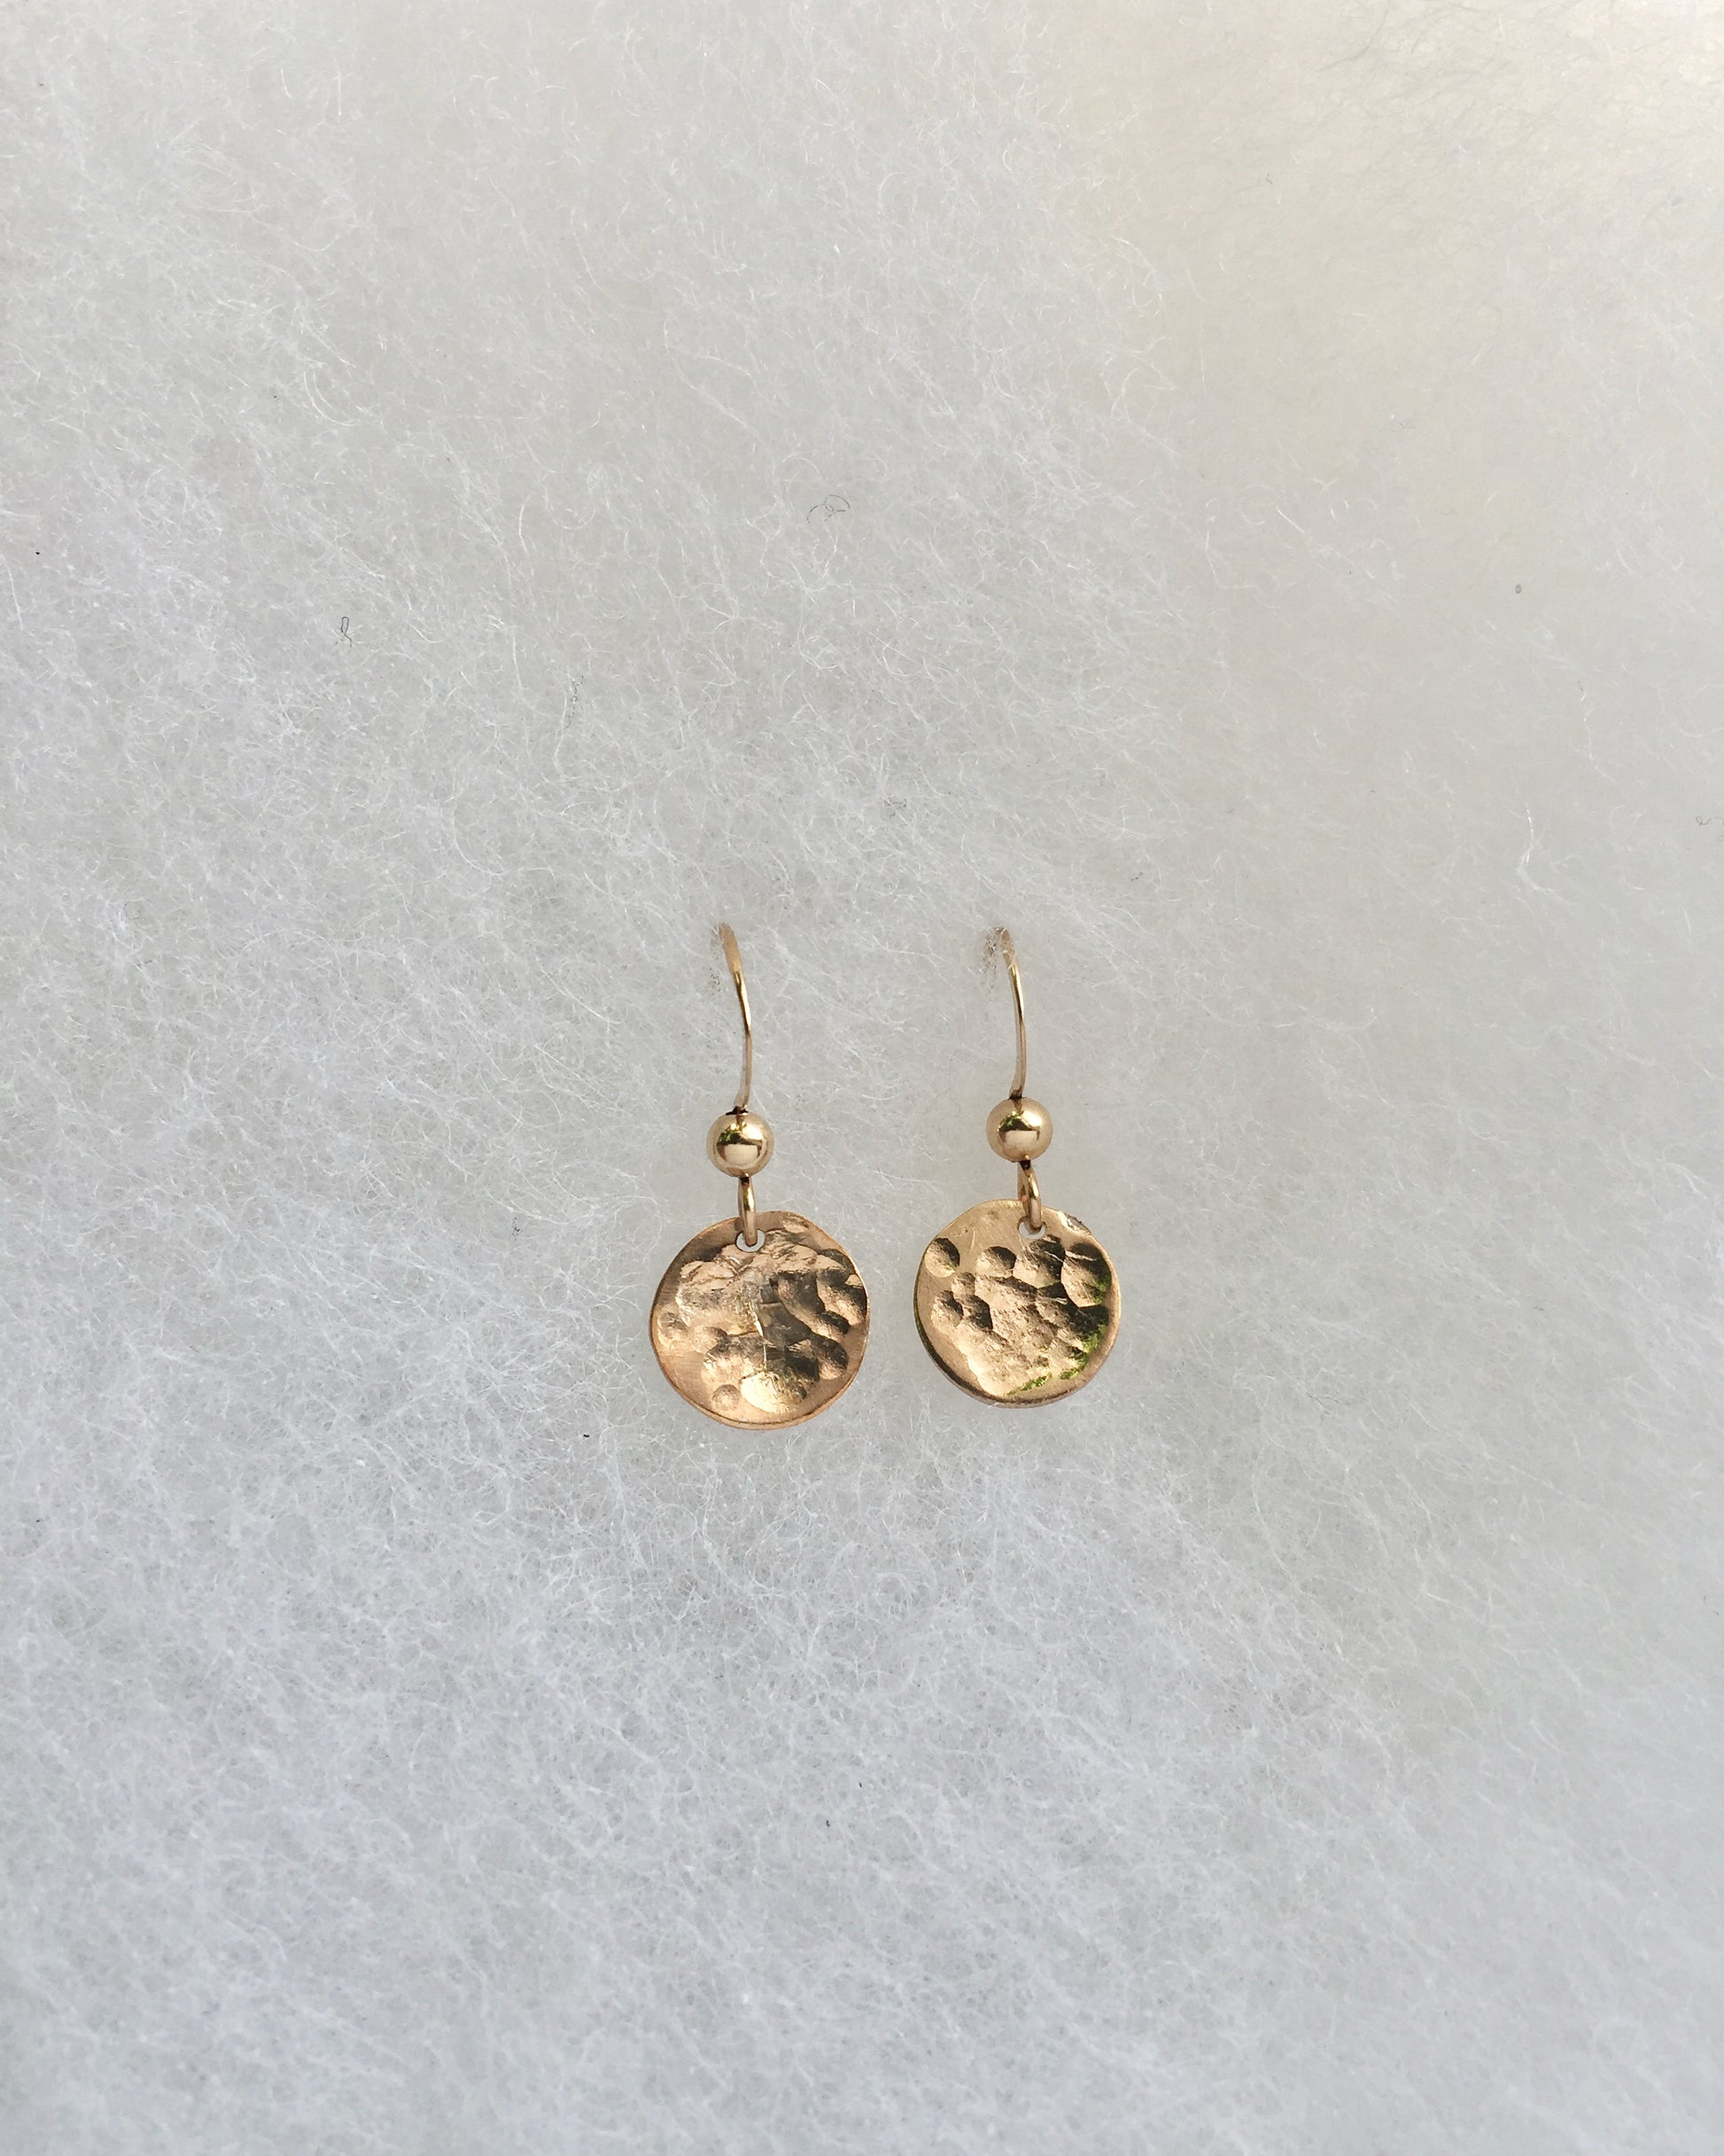 Small Hammered Disc Earrings | Simple Everyday Earrings | Dainty Minimalist Earrings | IB Jewelry